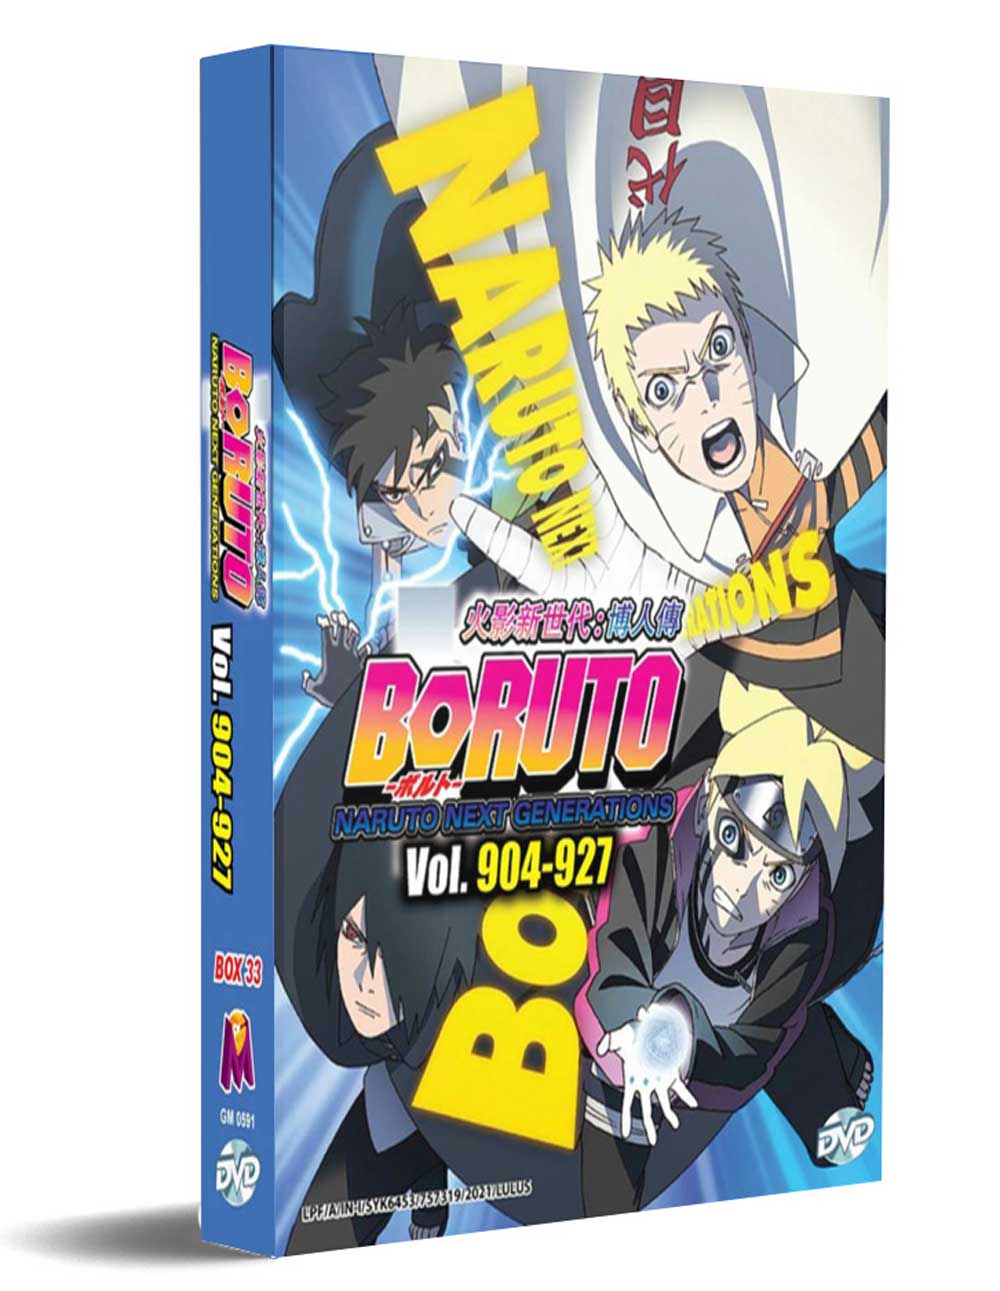 DVD ANIME BORUTO: NARUTO NEXT GENERATIONS VOL.856-879 (BOX 31)~ENGLISH  SUBTITLE~